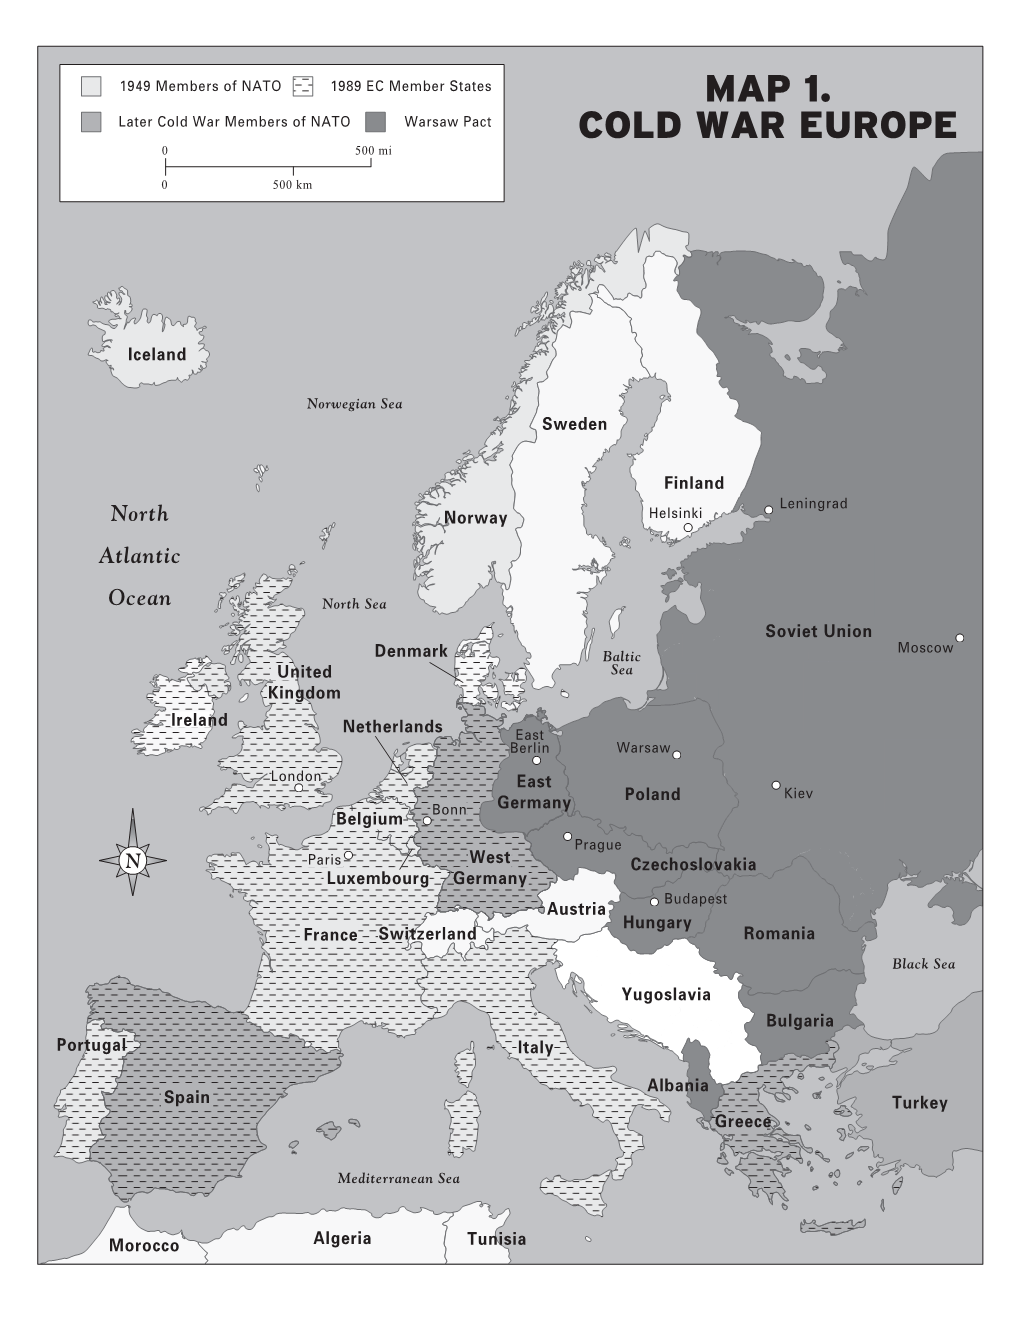 Map 1. Cold War Europe